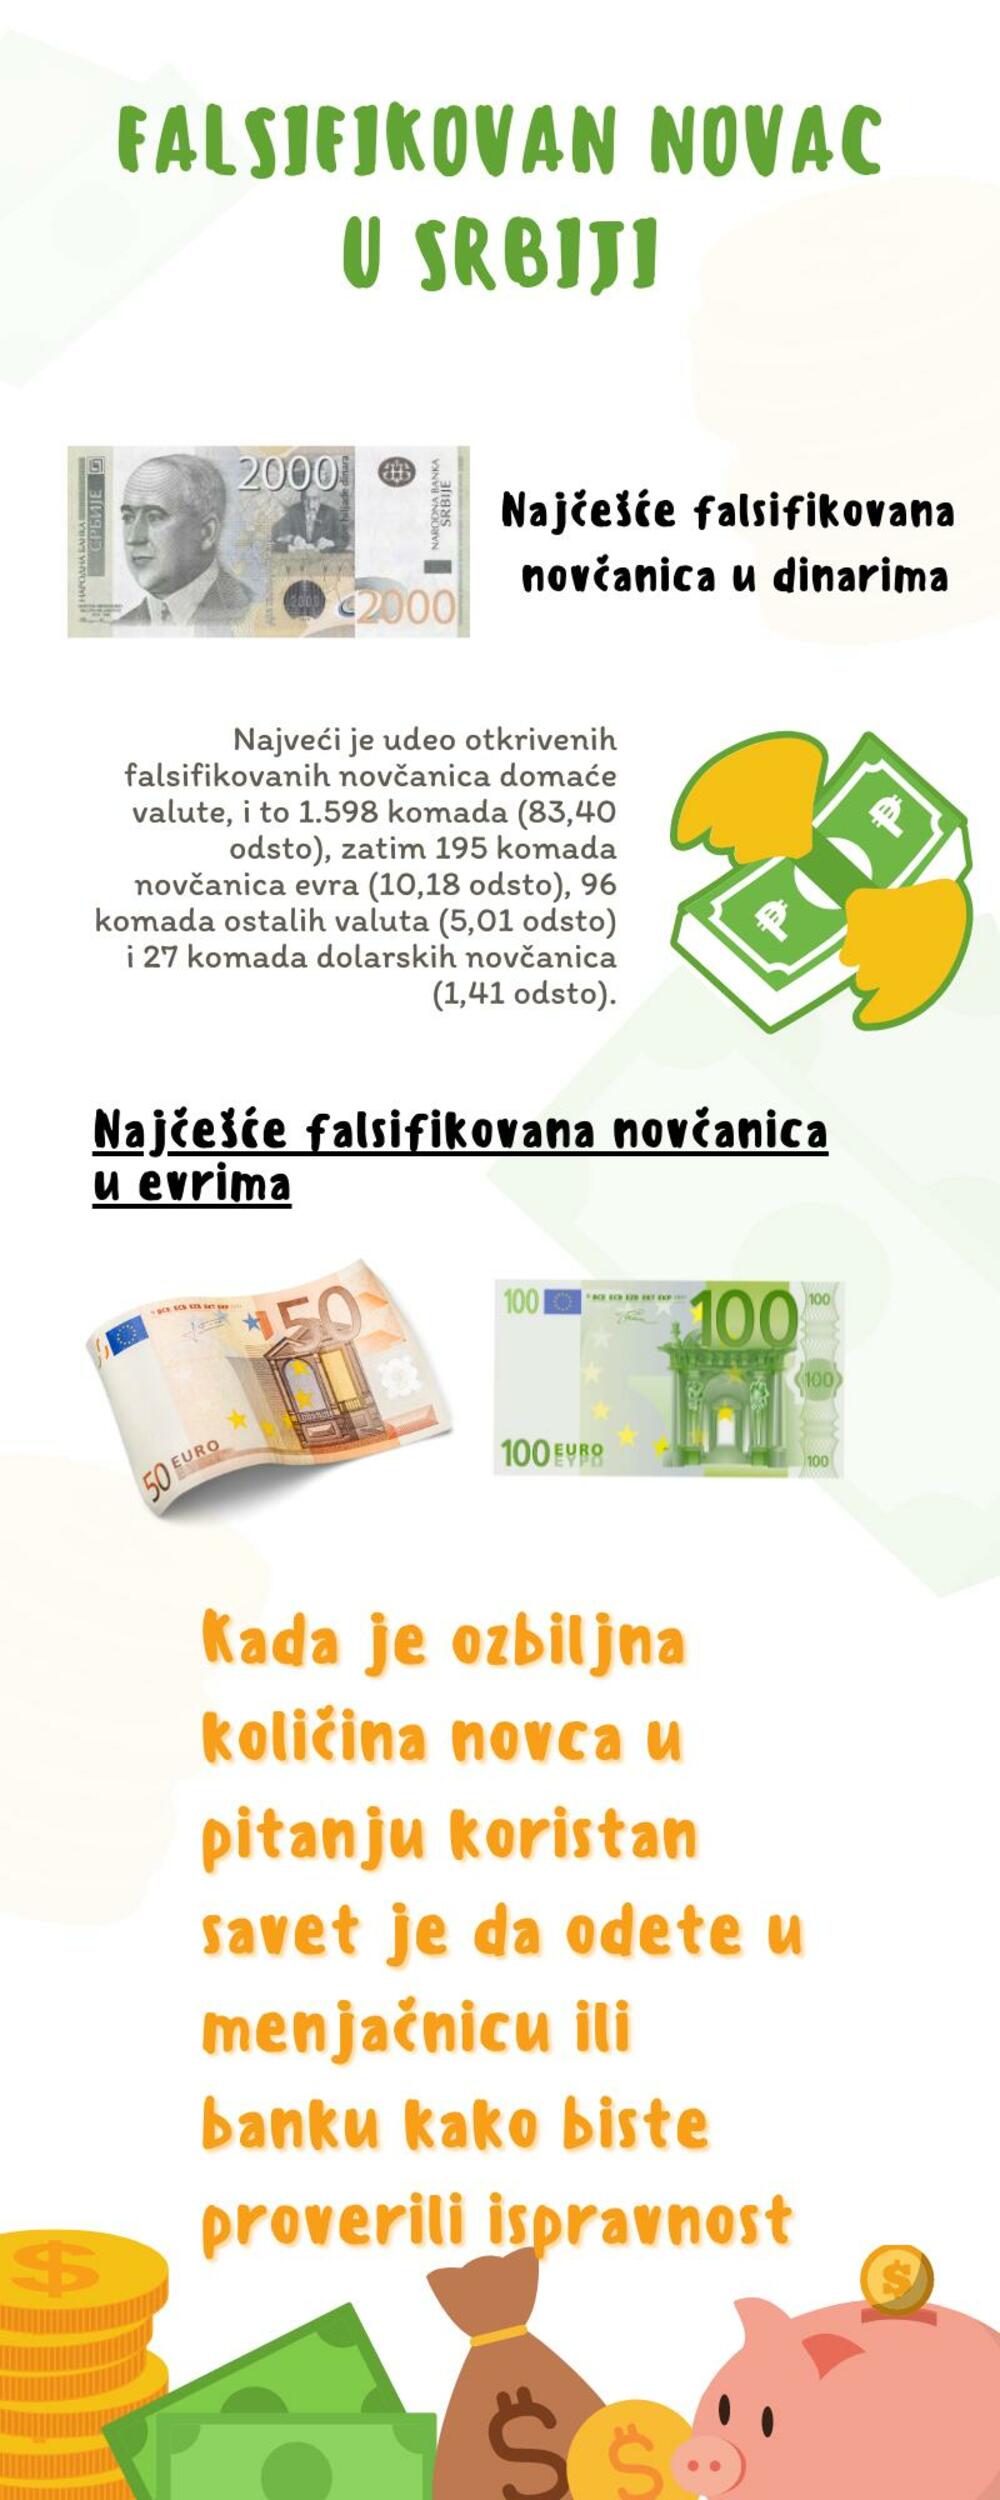 Infografika/Lažni novac